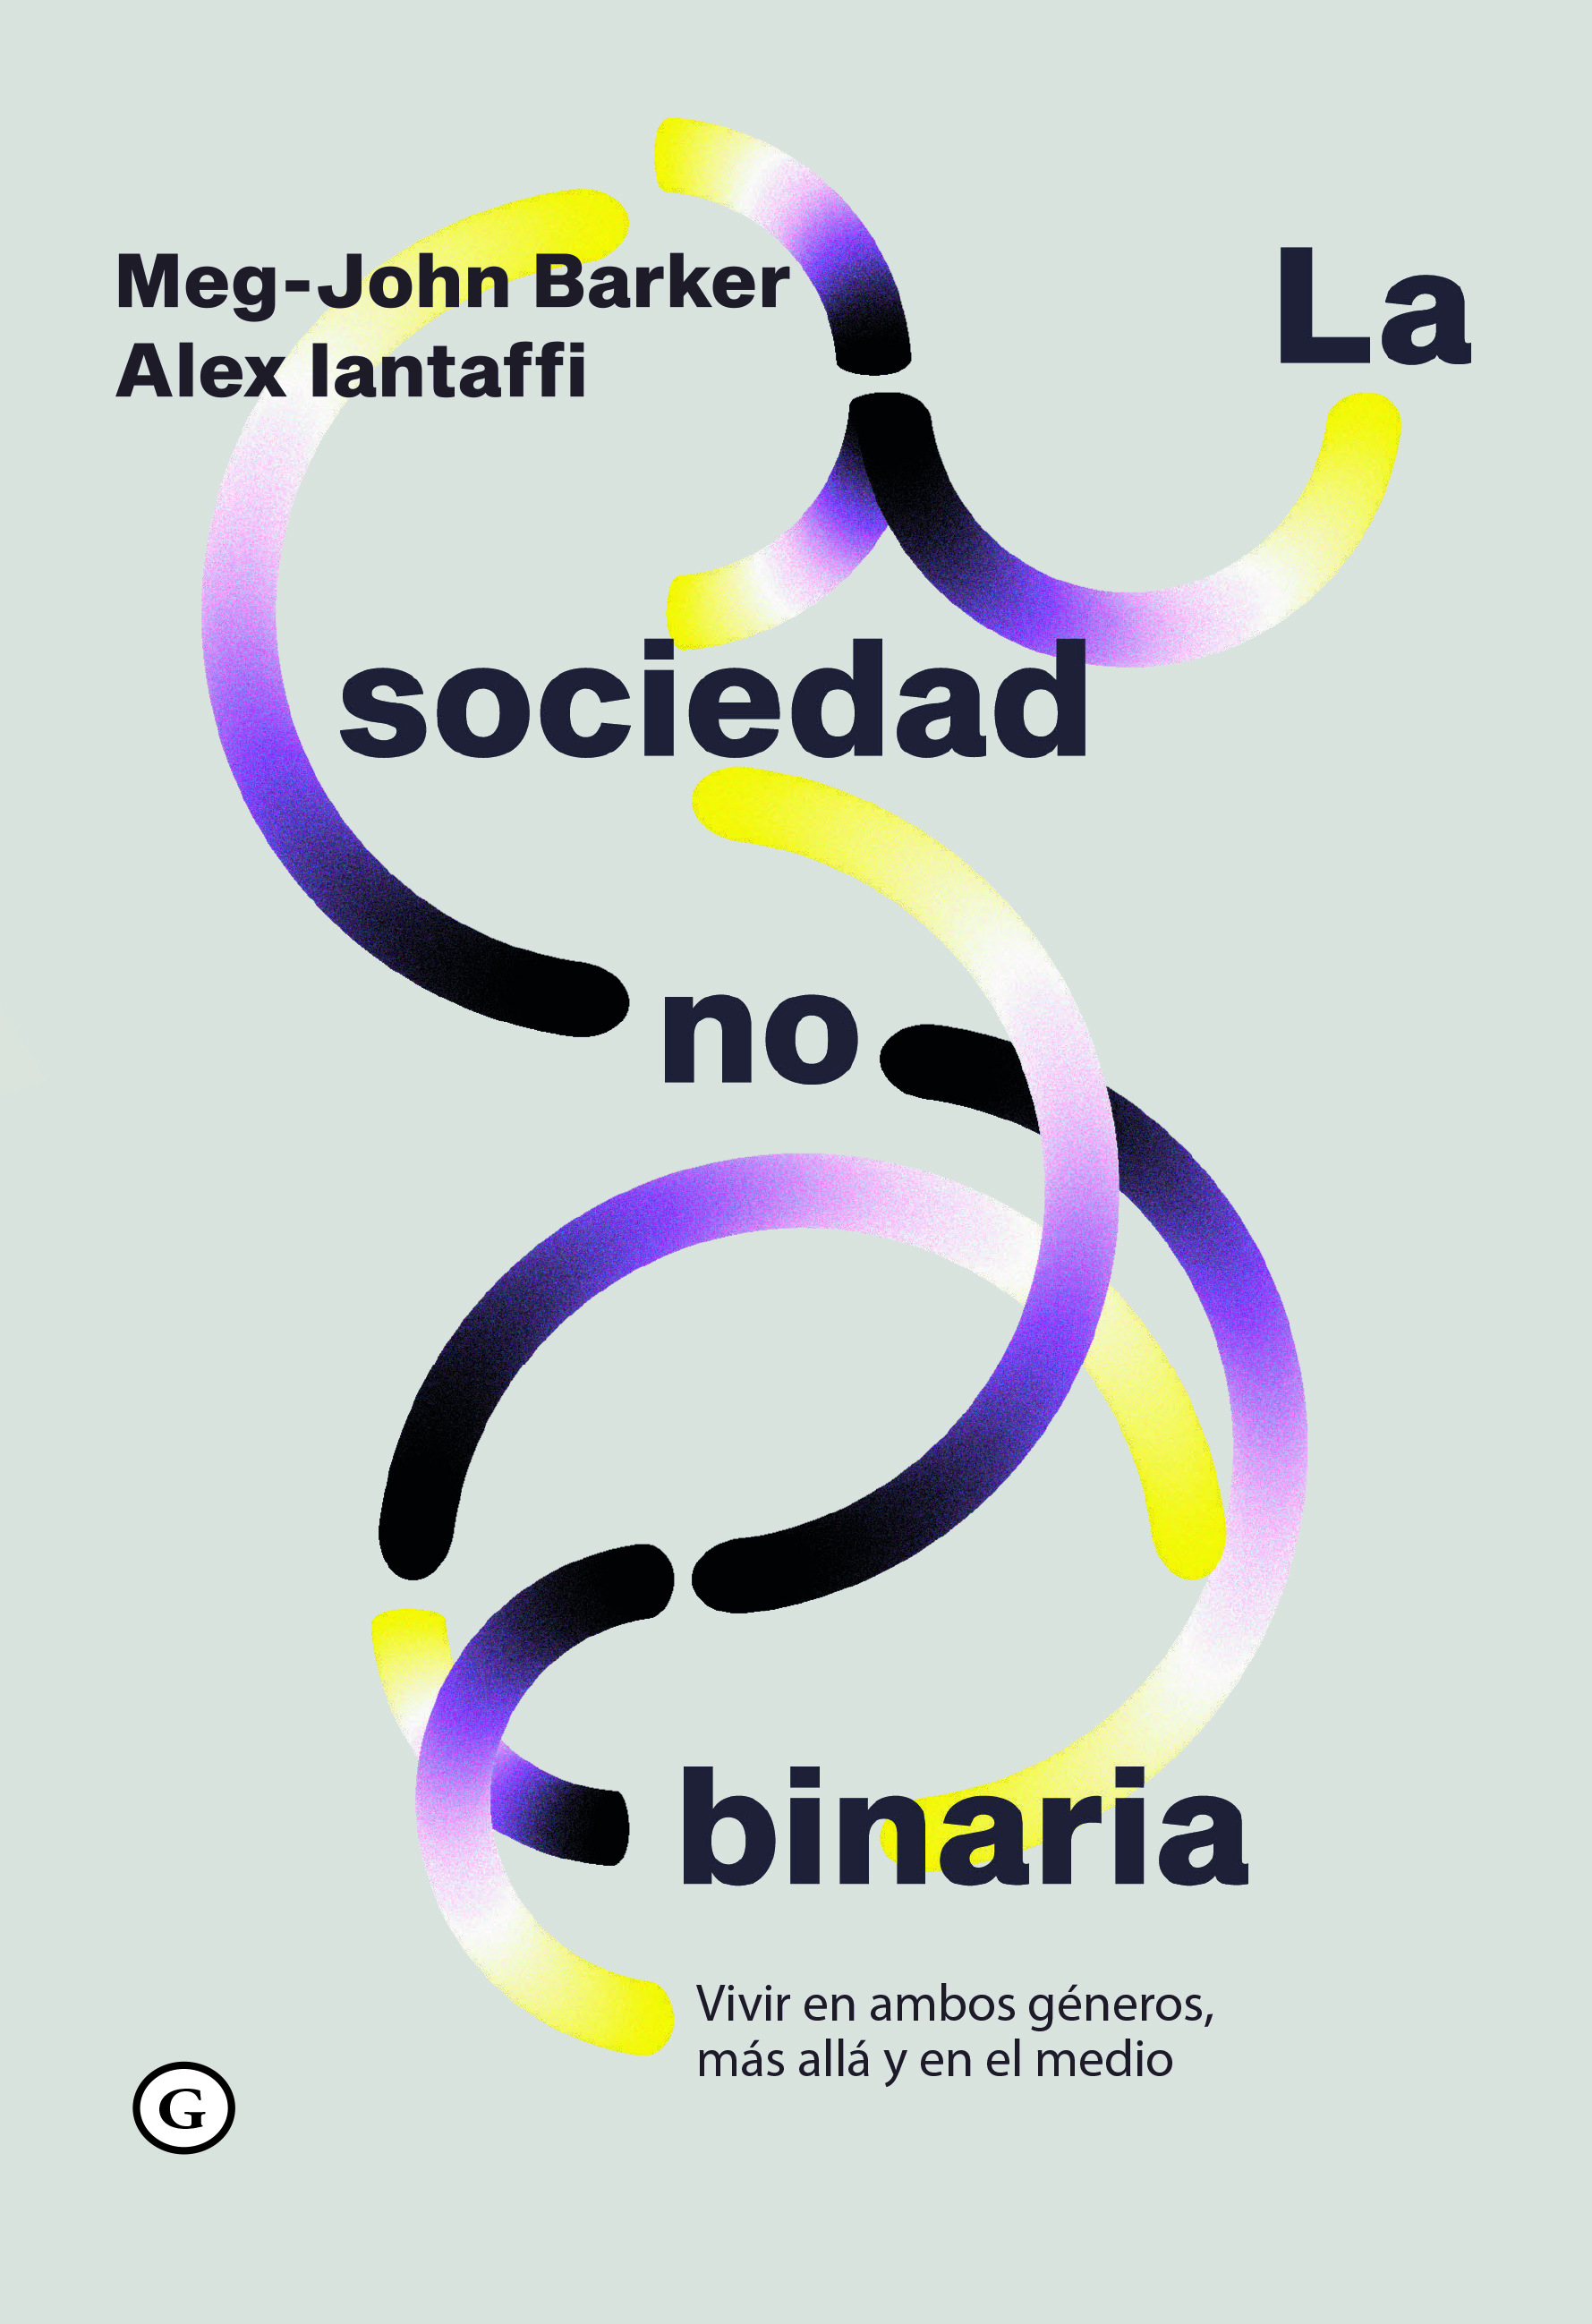 La sociedad no binaria - Alex Iantaffi | Meg-John Barker